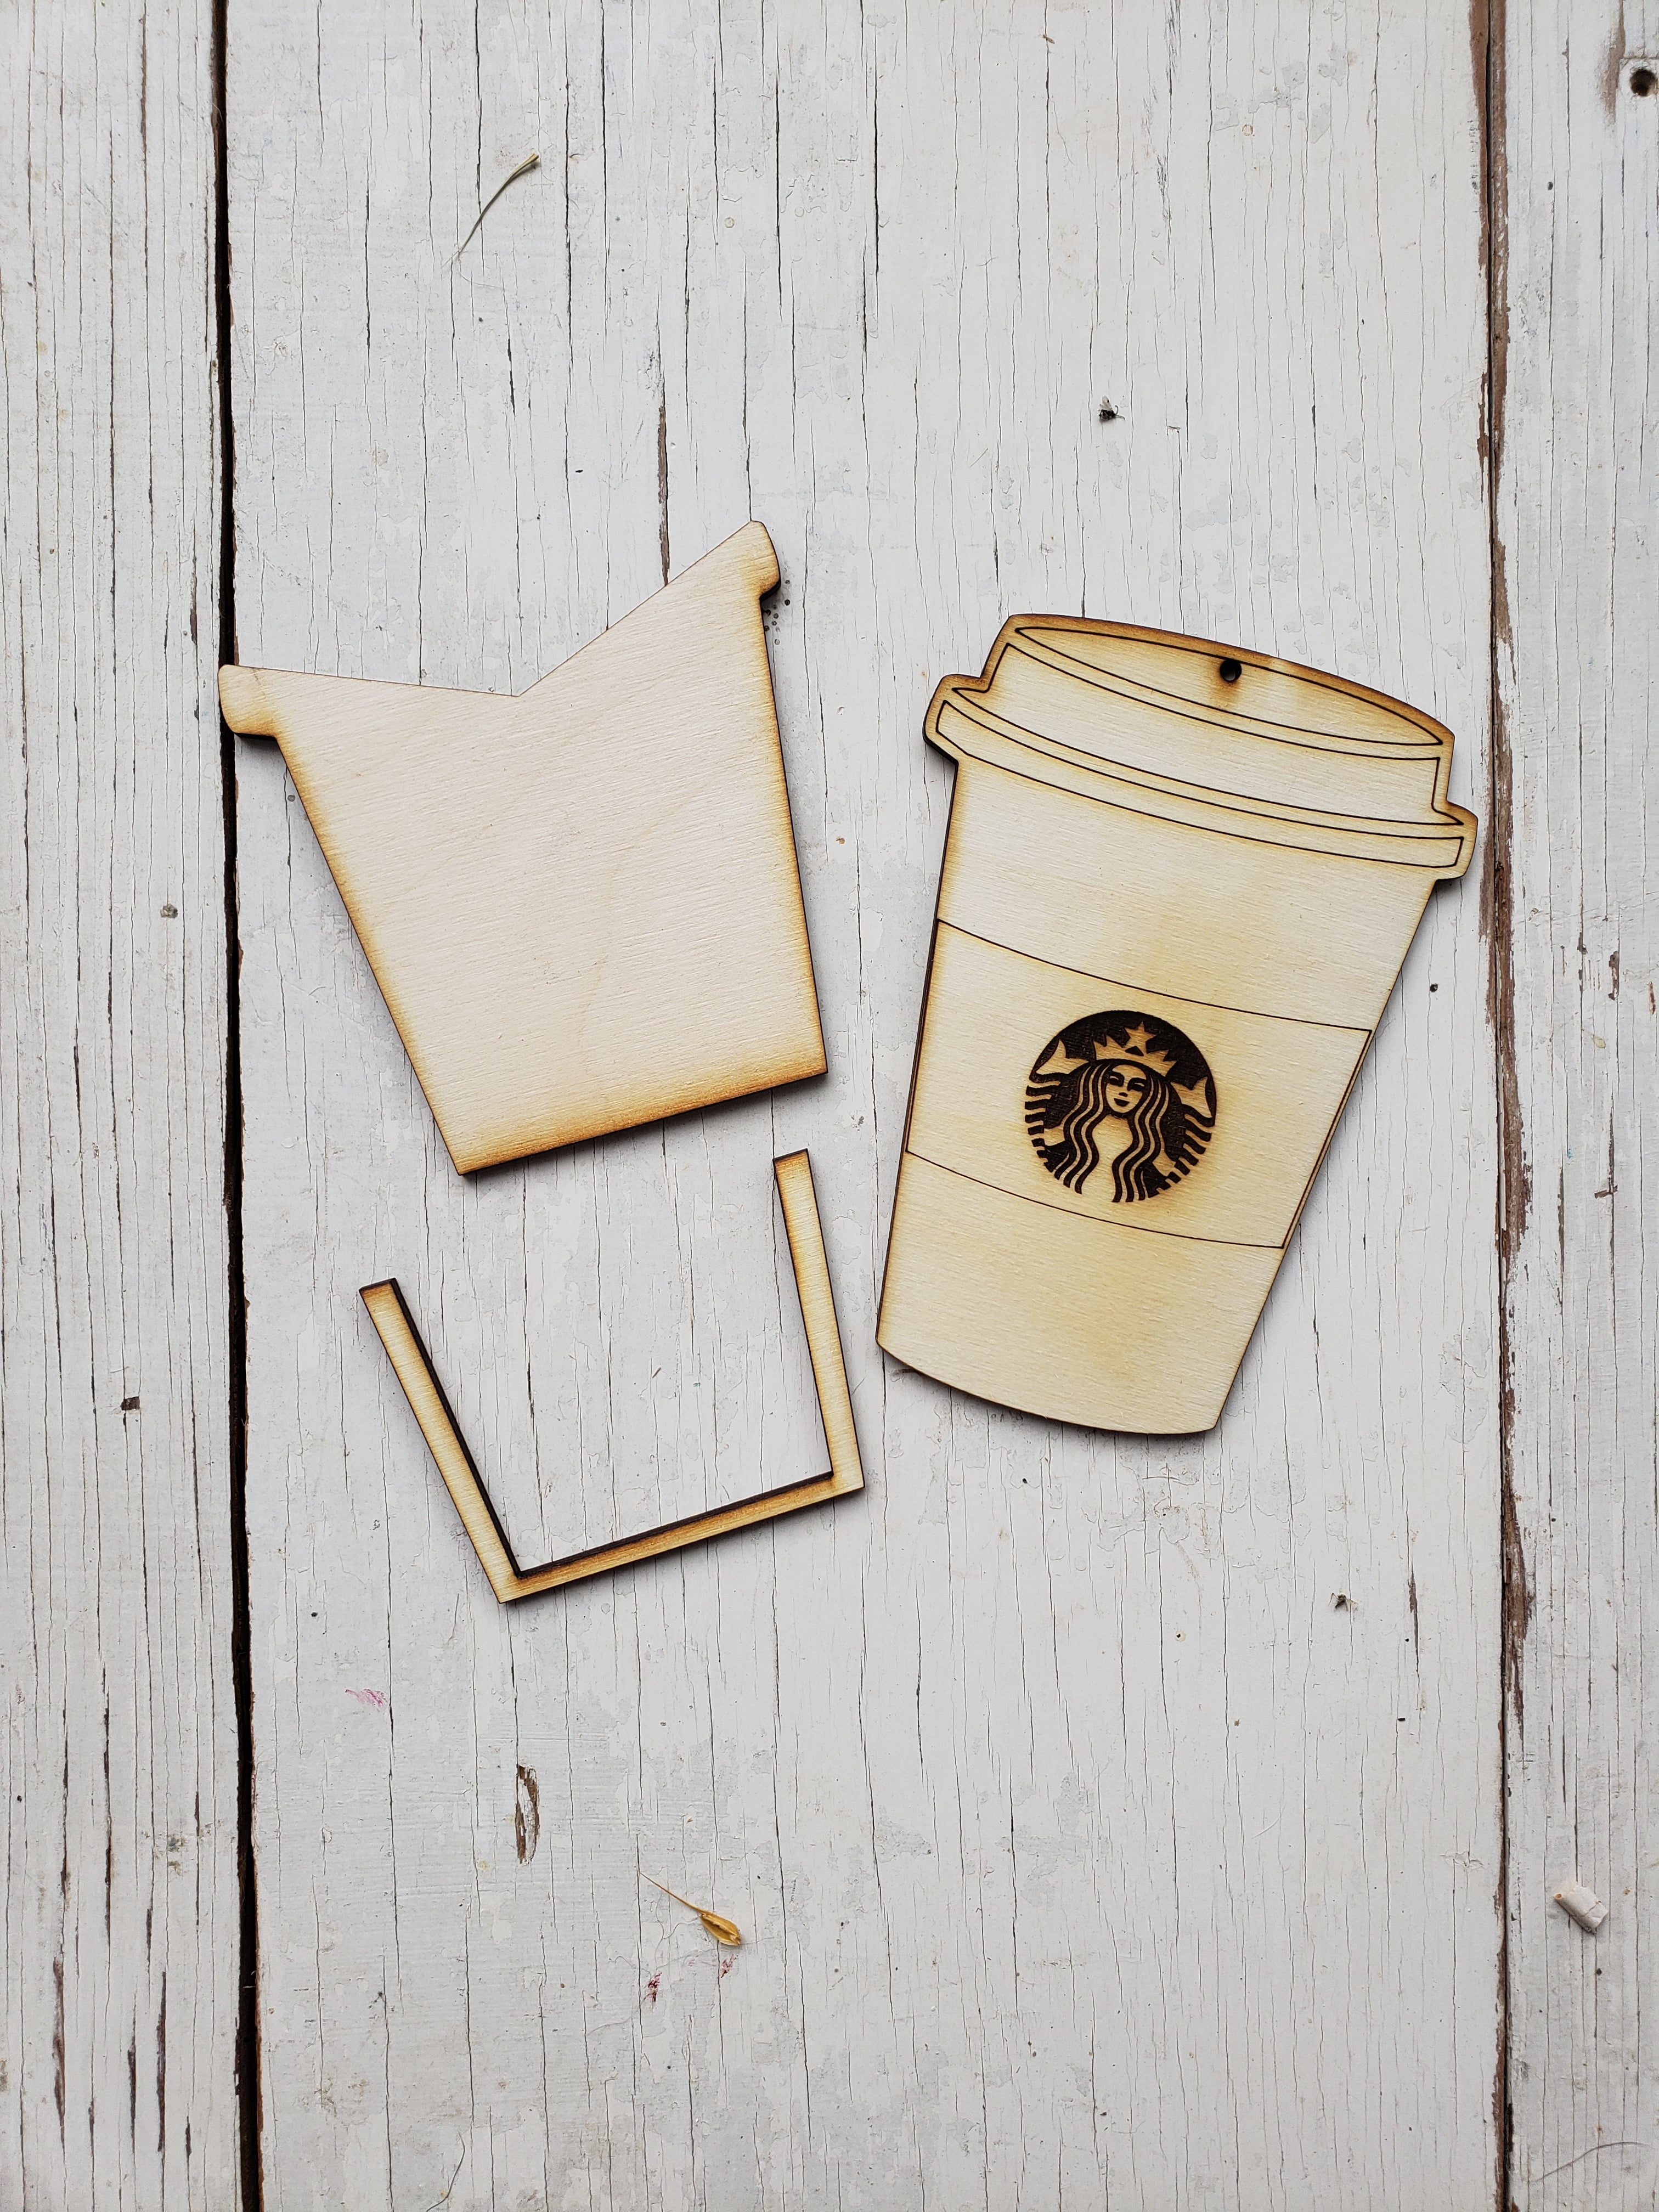 DIY Starbucks Coffee Cup Gift Card Holder